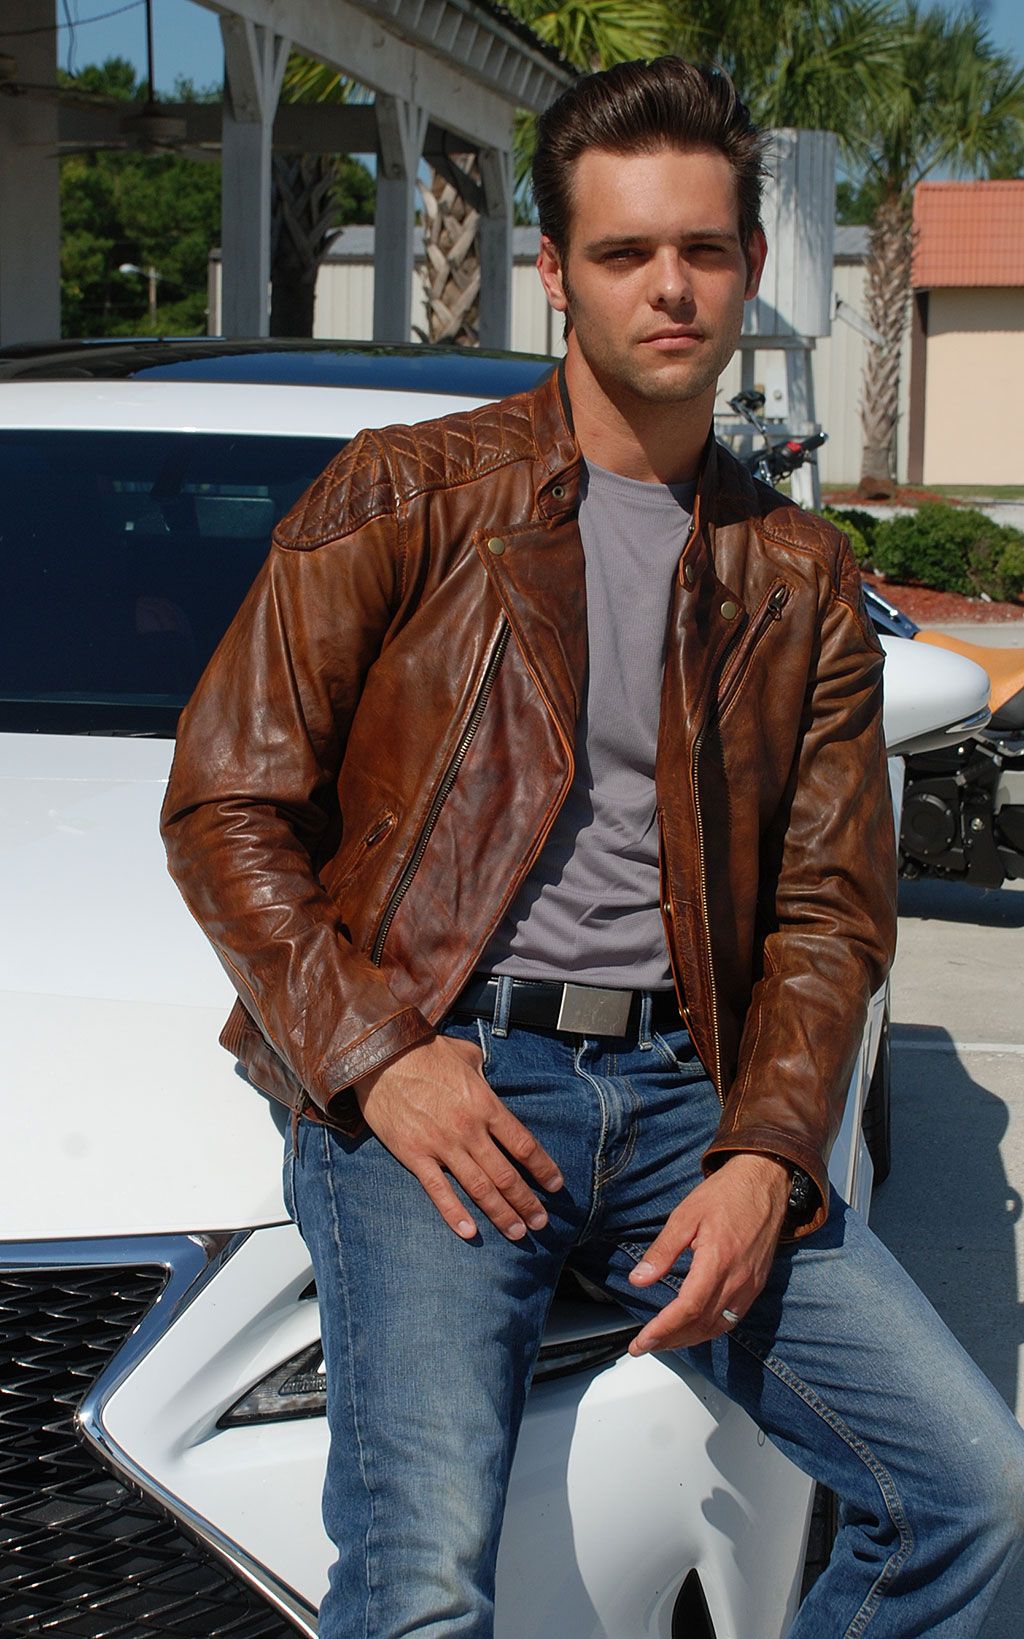 Biker wearing brown leather jacket on a car